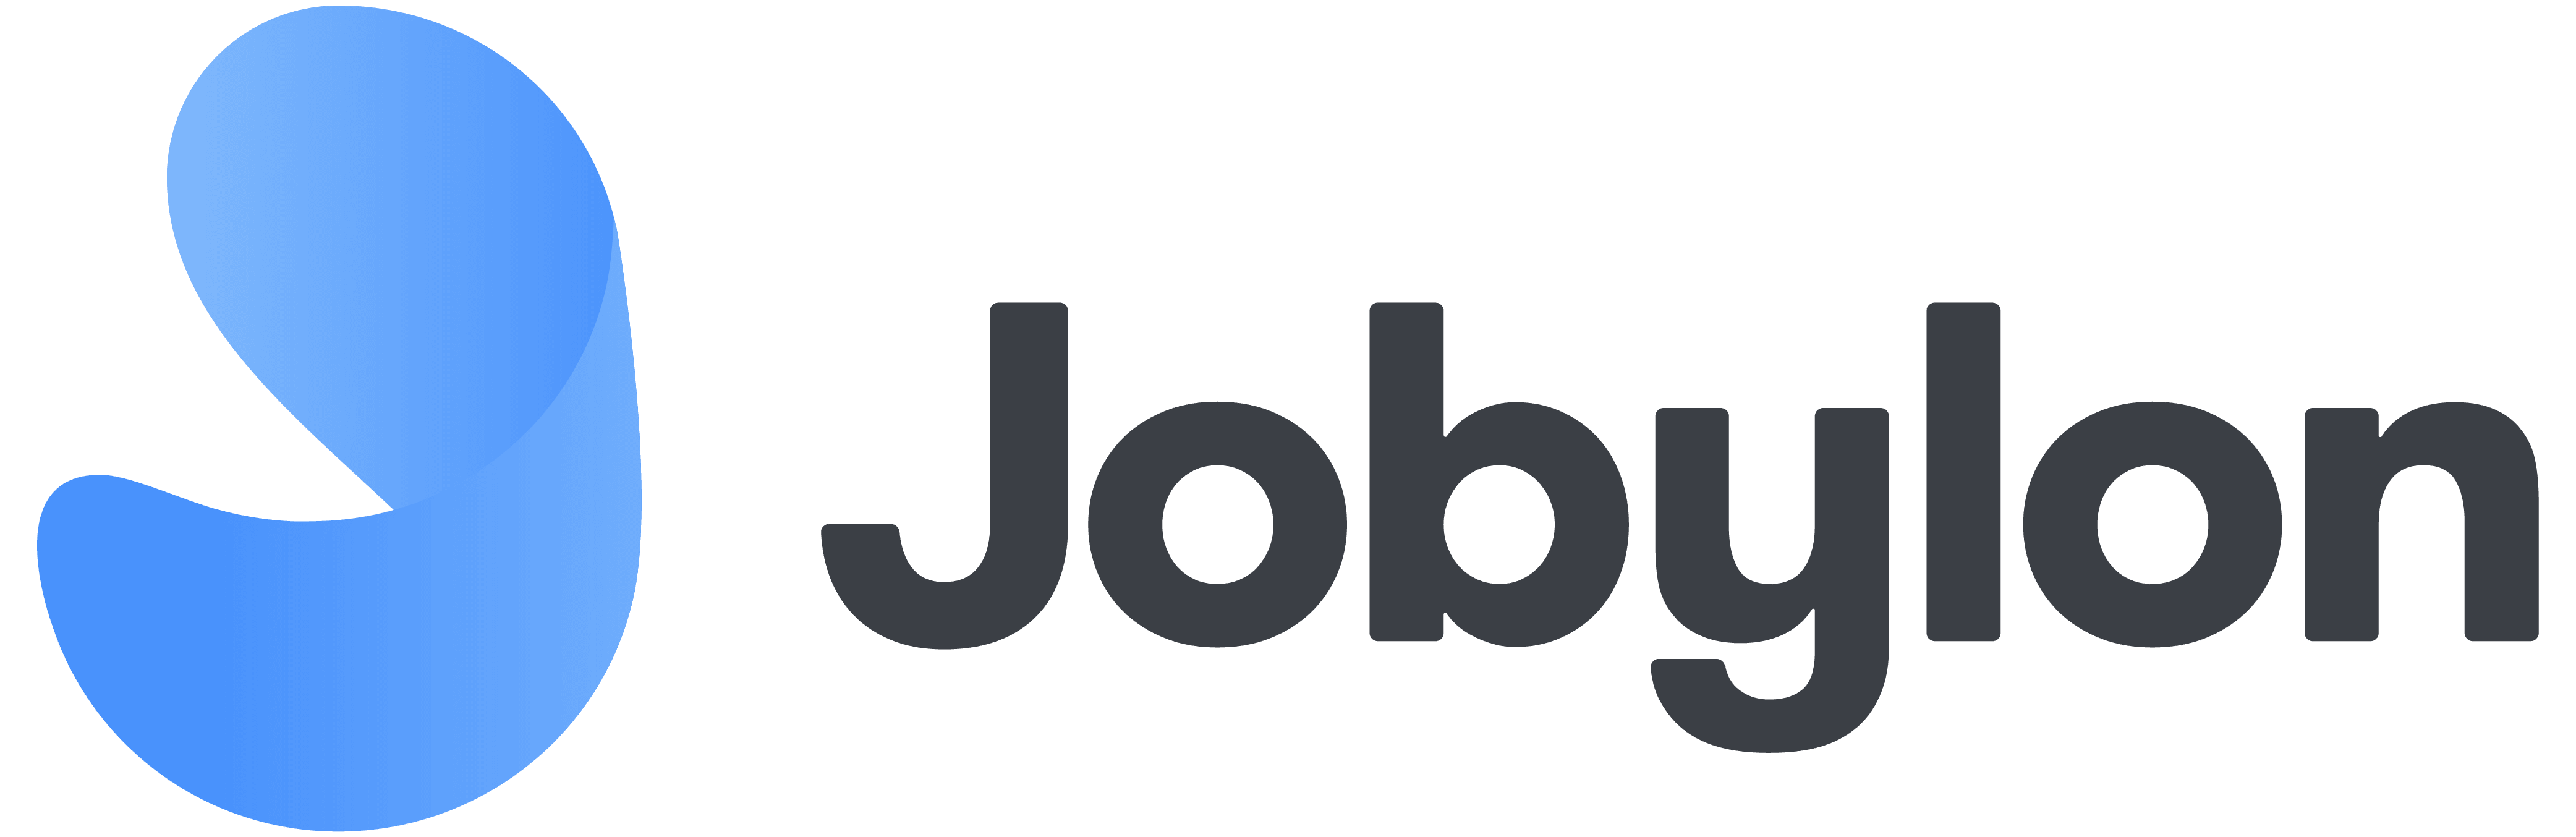 Jobylon logo